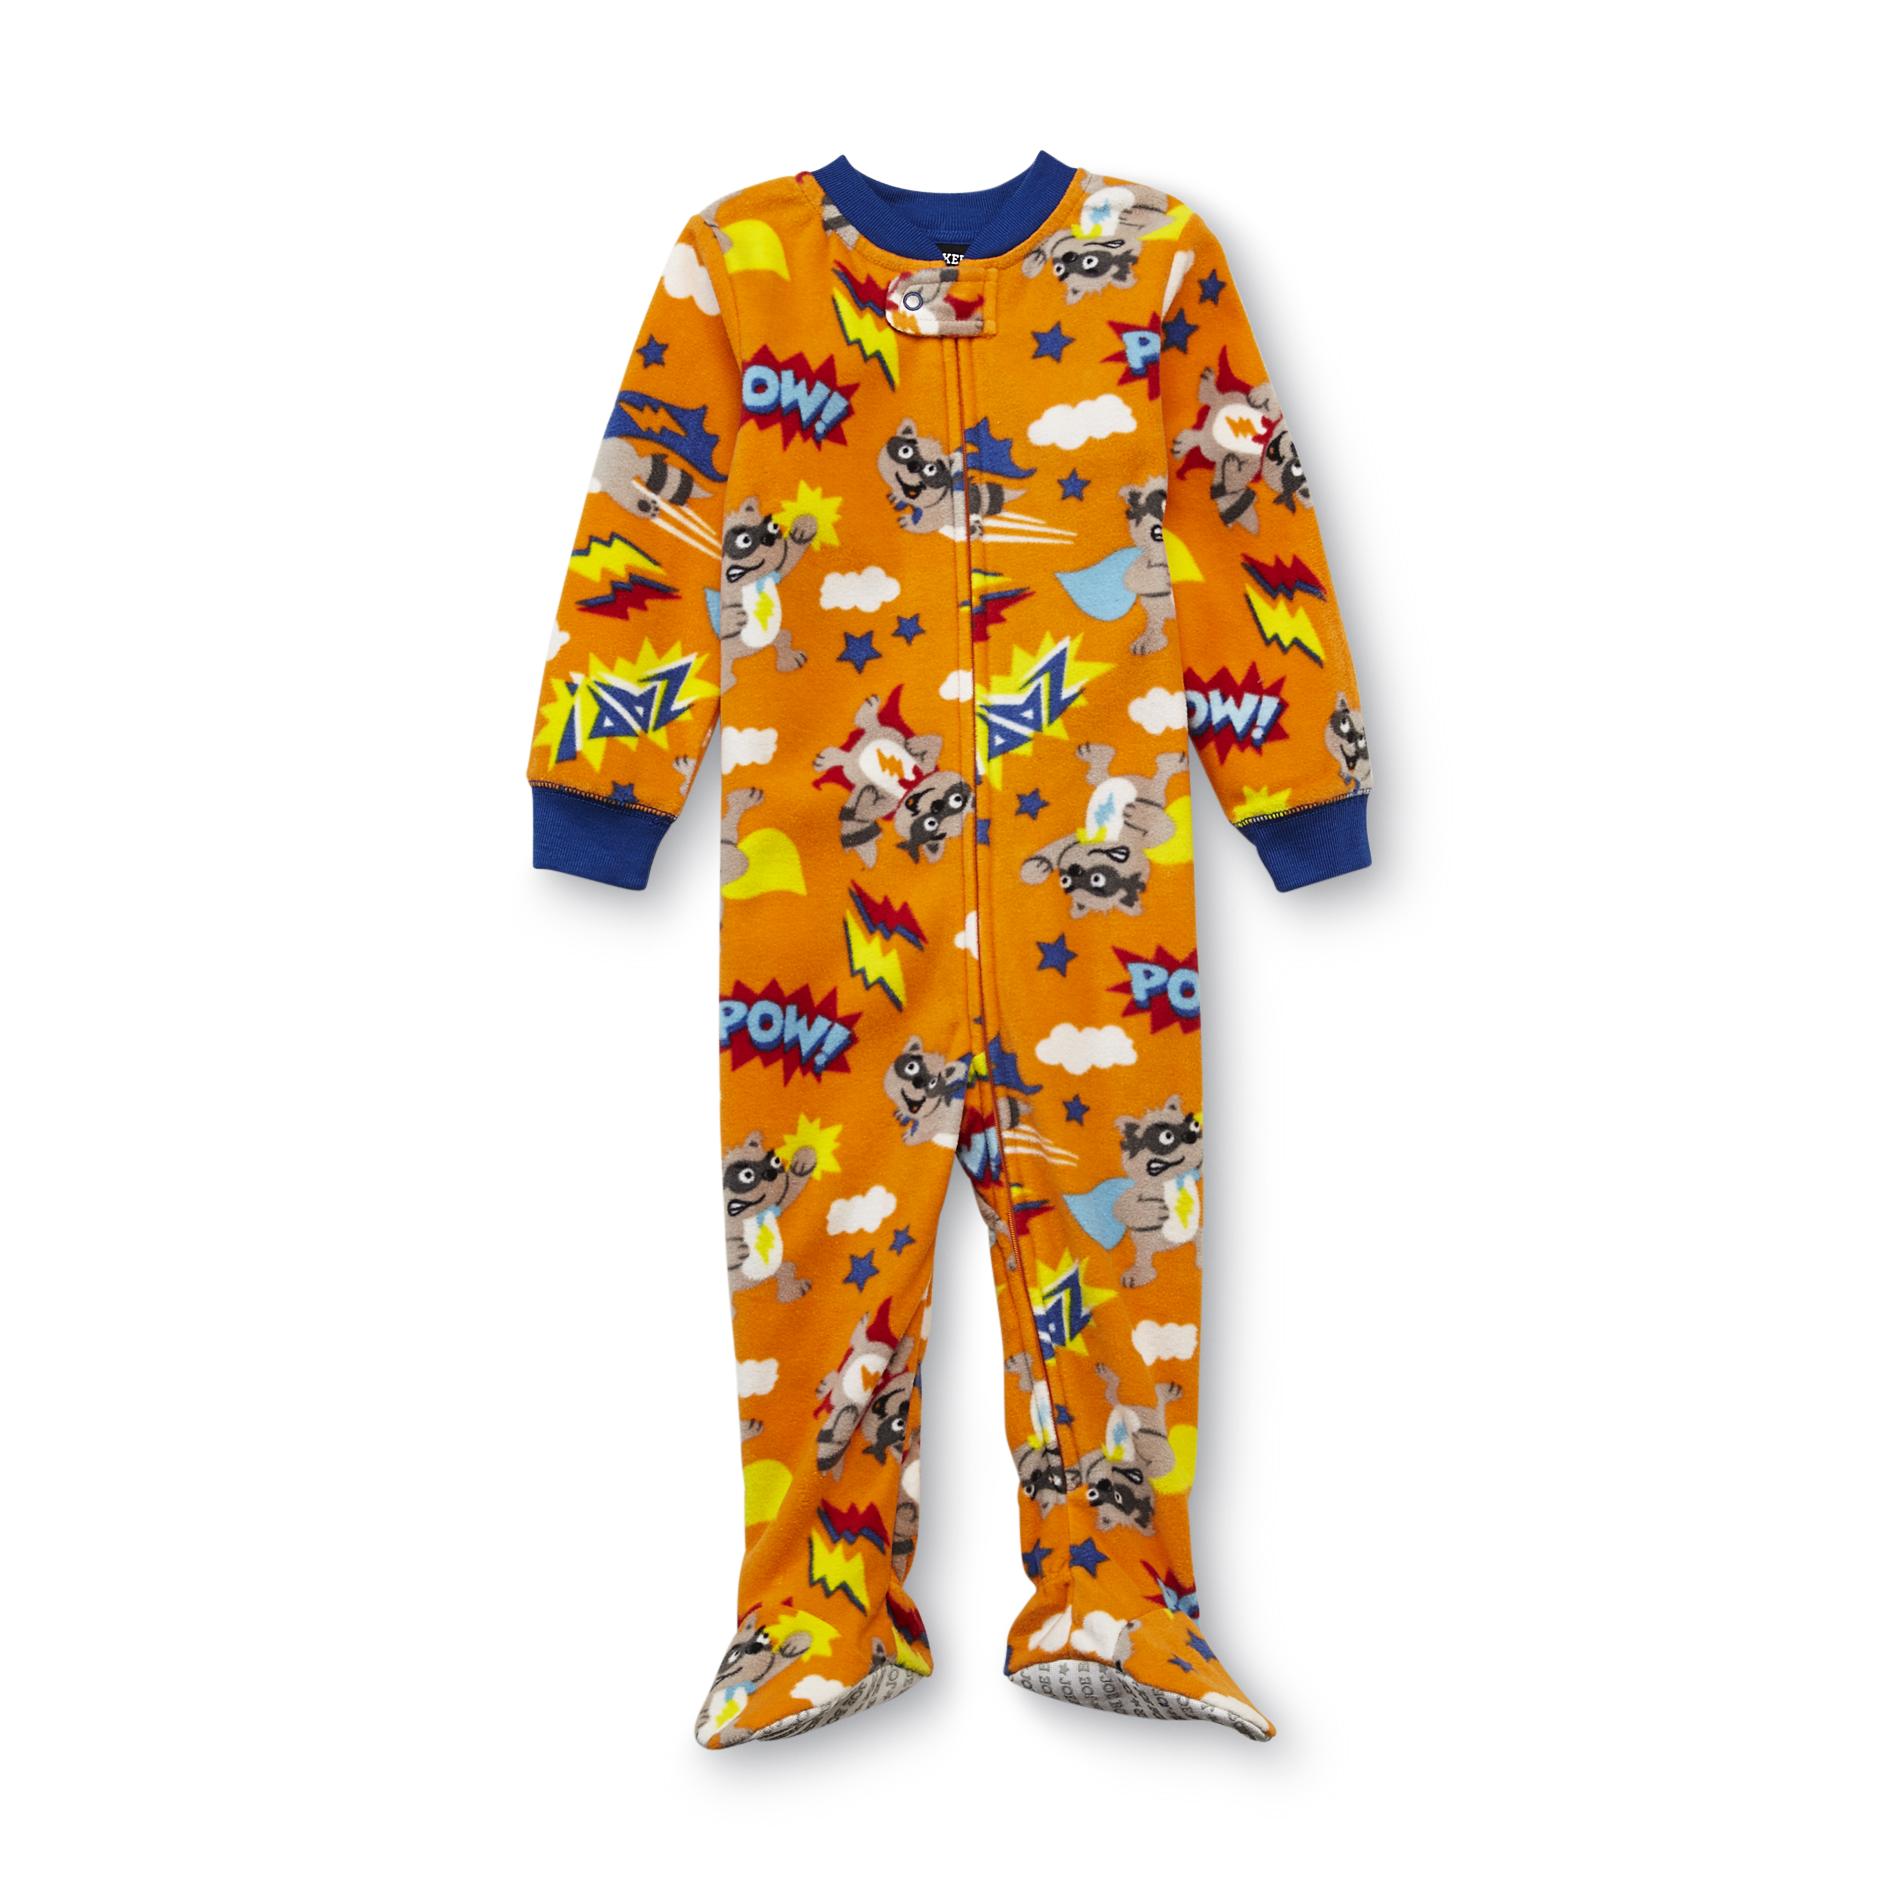 Joe Boxer Infant & Toddler Boy's Footed Sleeper Pajamas - Raccoon